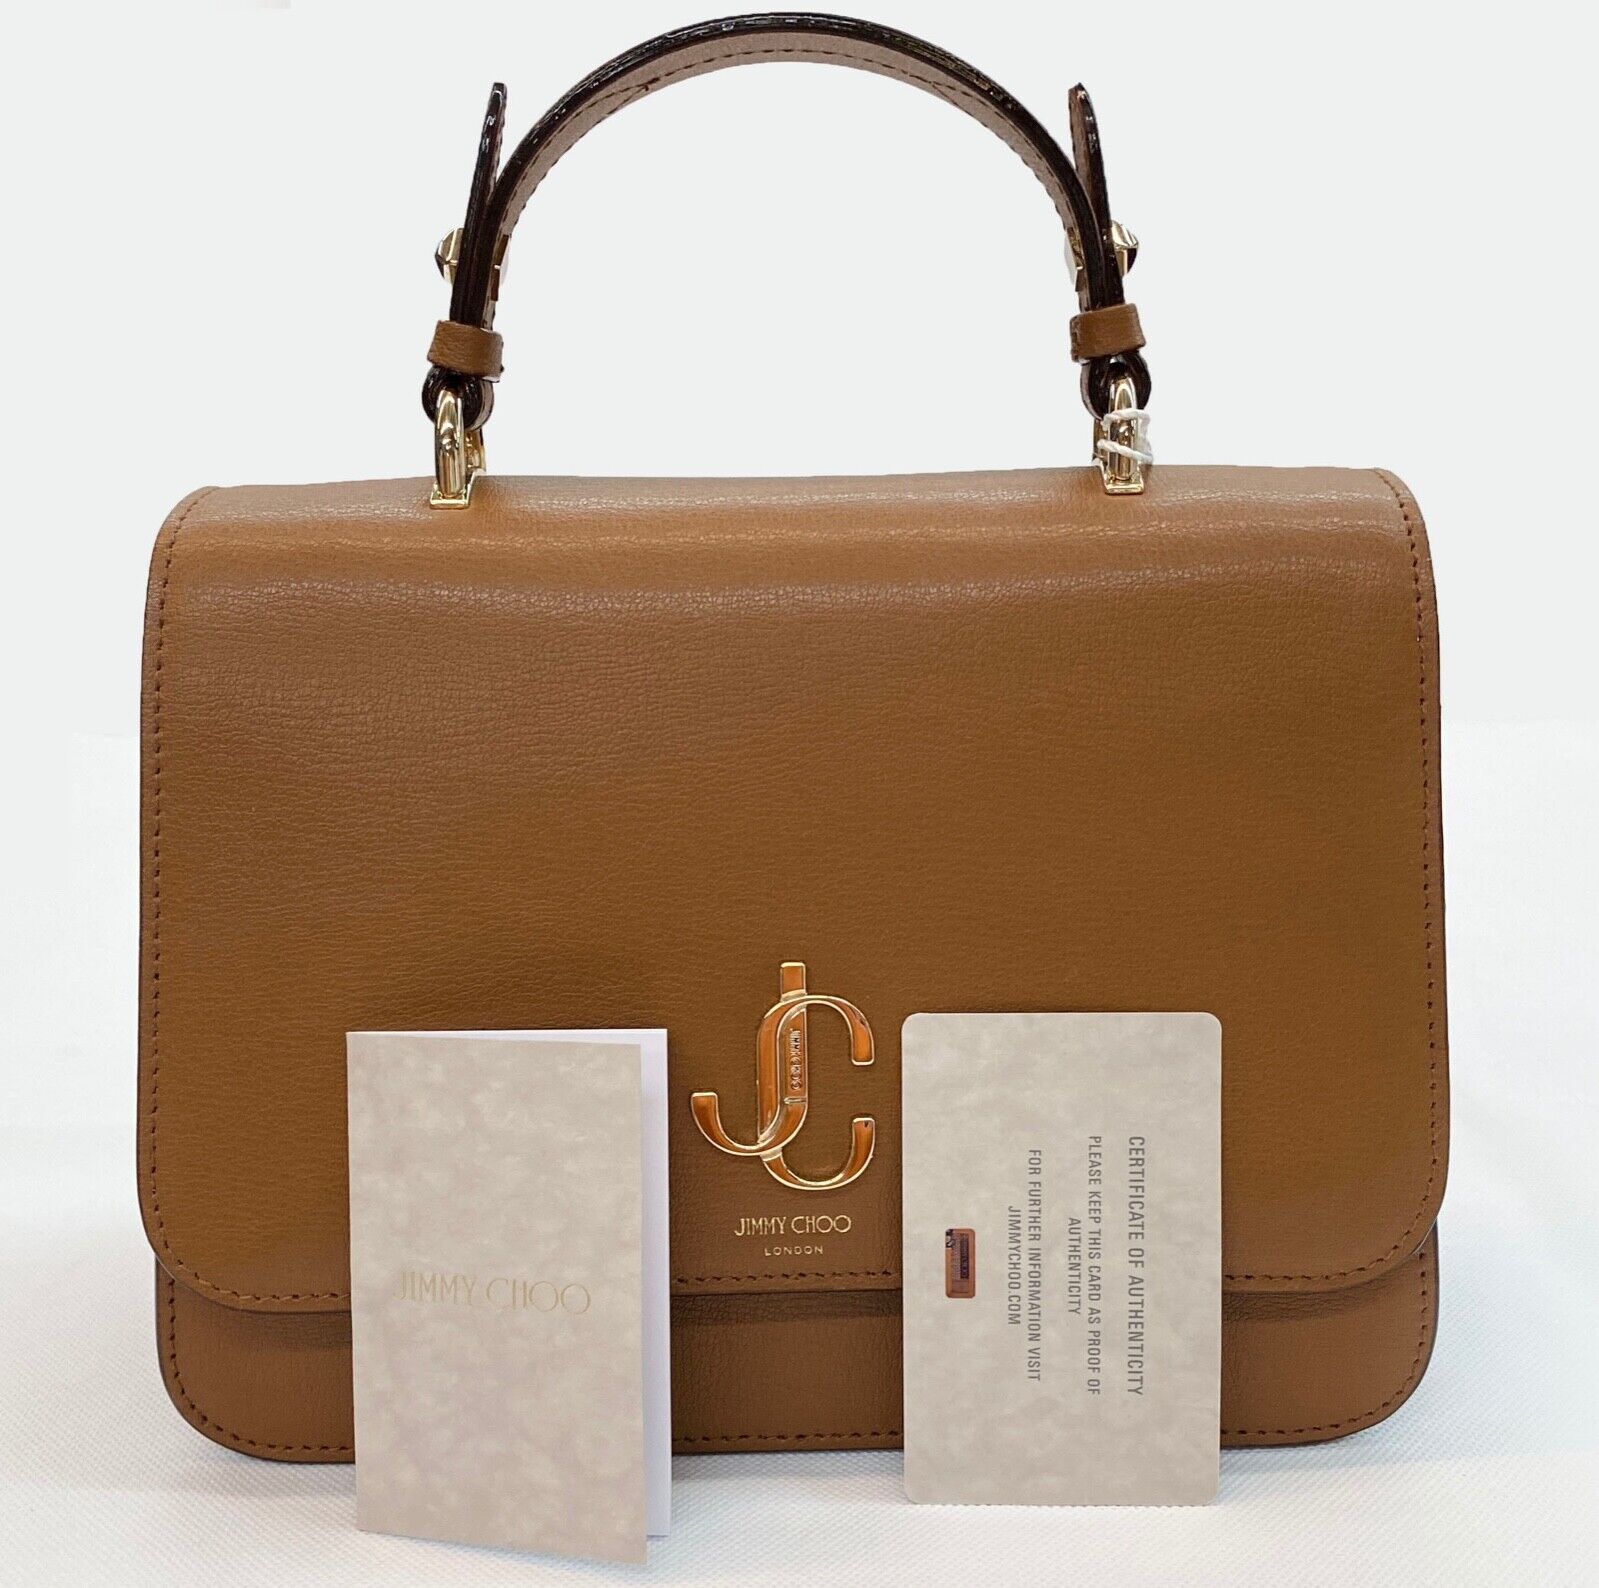 NWT Jimmy Choo Light Grainy Leather Crossbody Handbag w/top handle, Brown  $1495 194611911548 | eBay